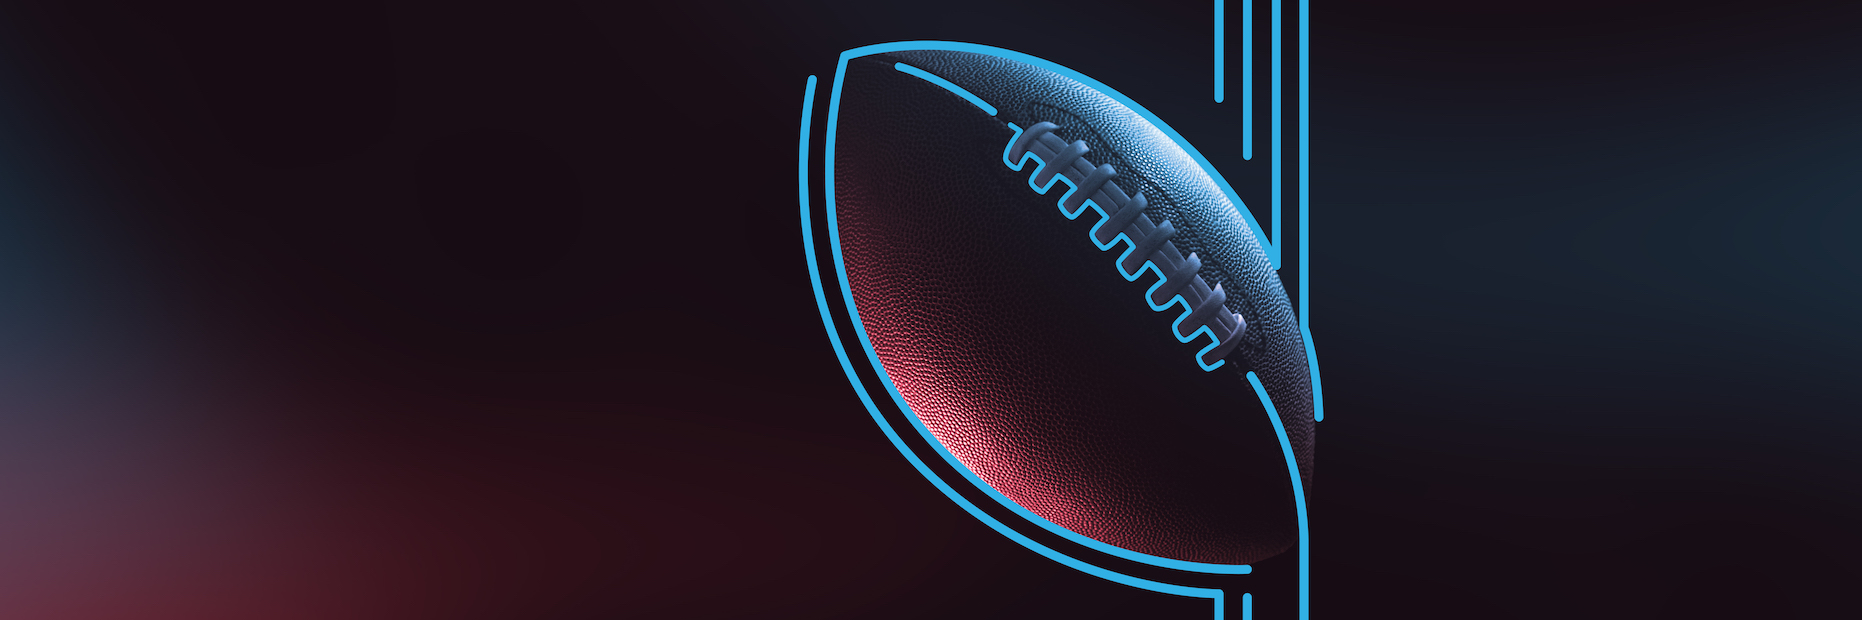 Brand Bowl 2021 Ad Tracker: Amazon